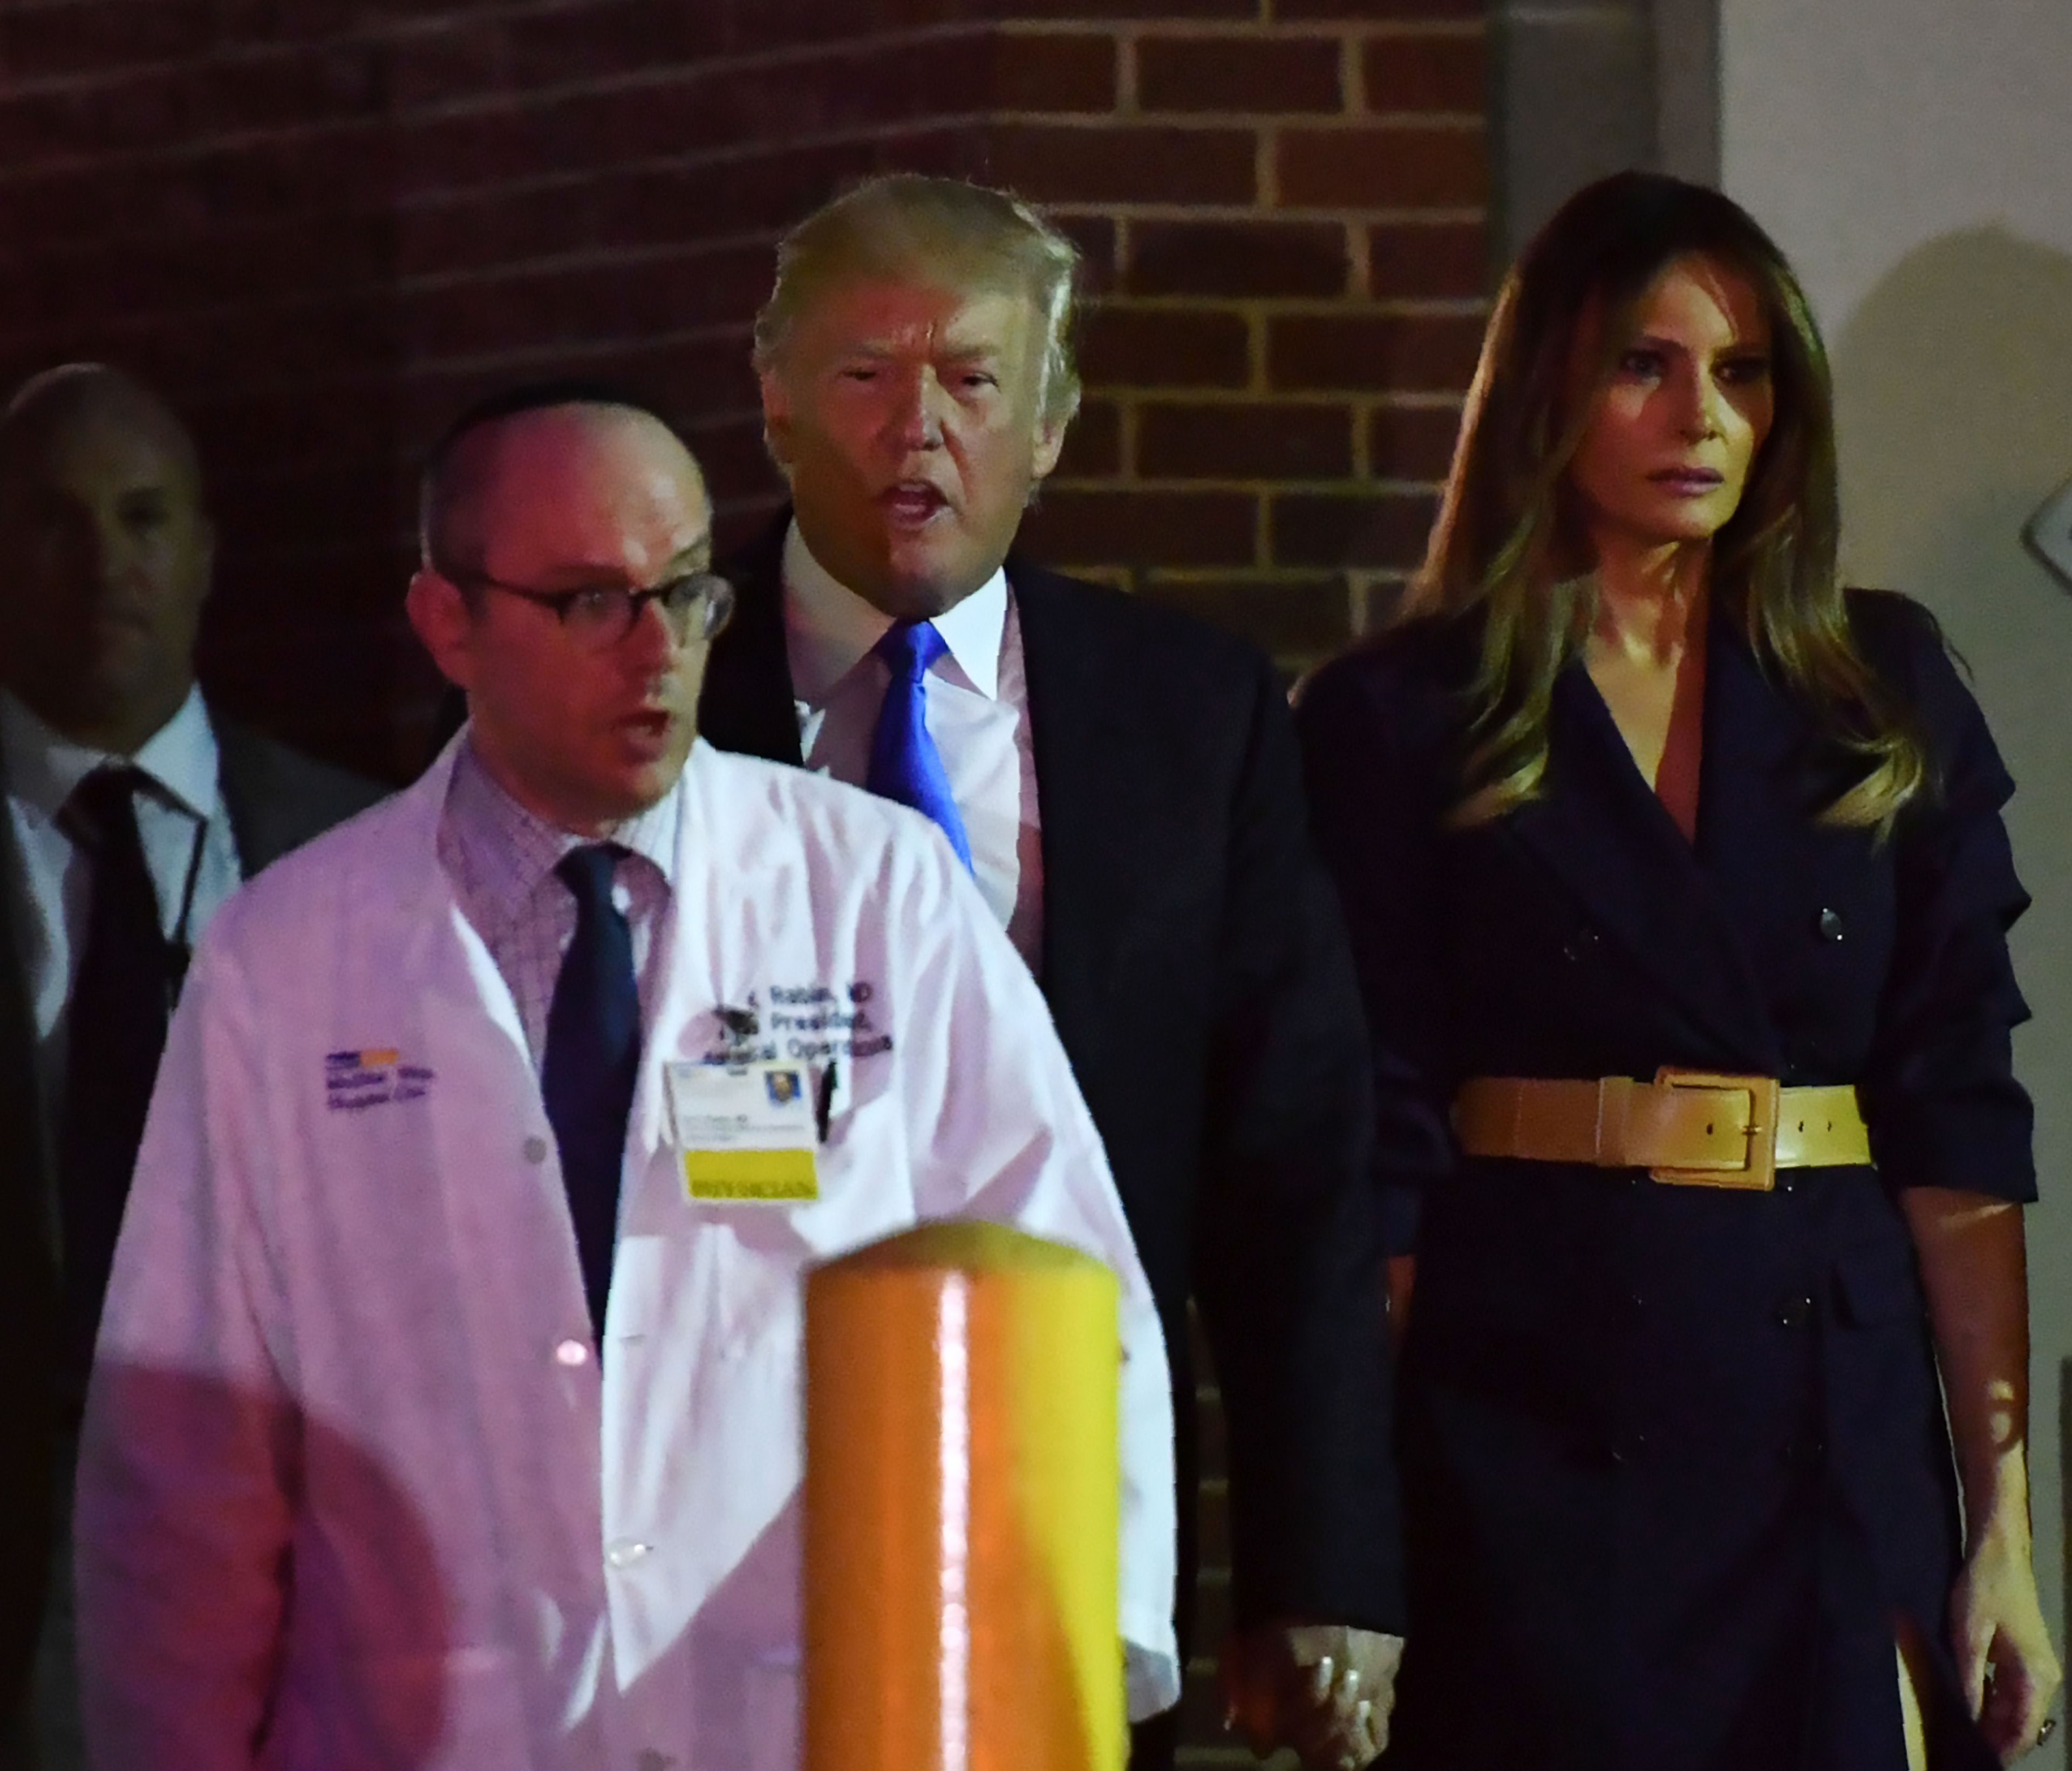 Dr. Ira Rabin escorts President Trump and first lady Melania Trump from MedStar Washington Hospital Center Wednesday.